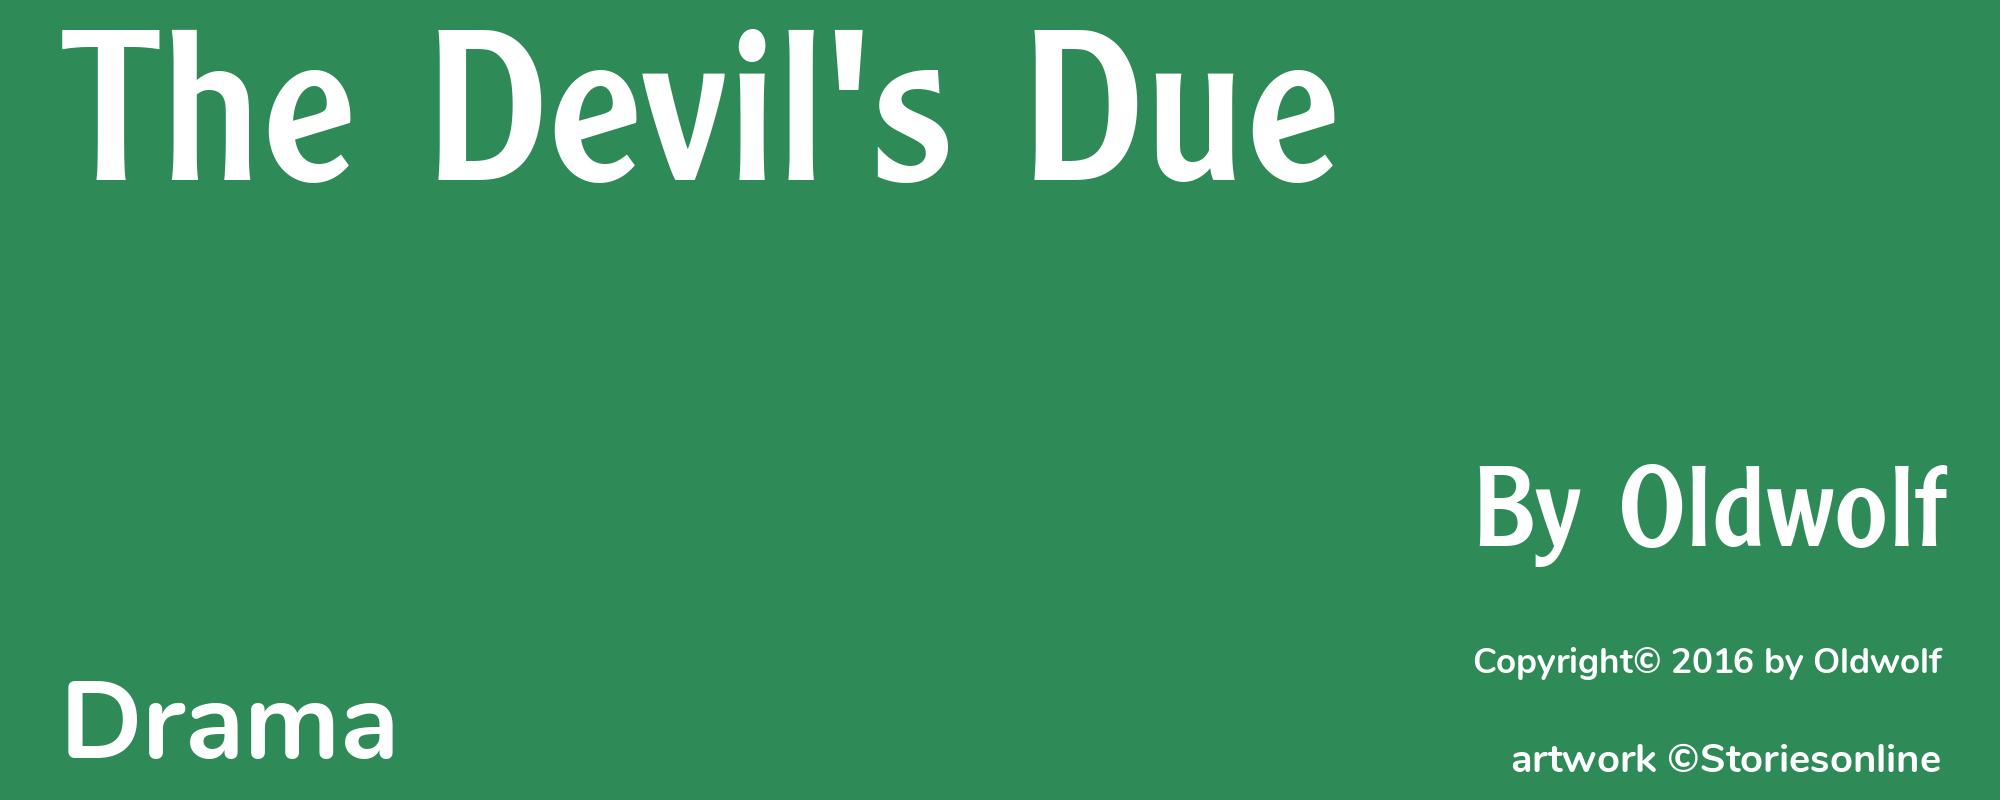 The Devil's Due - Cover